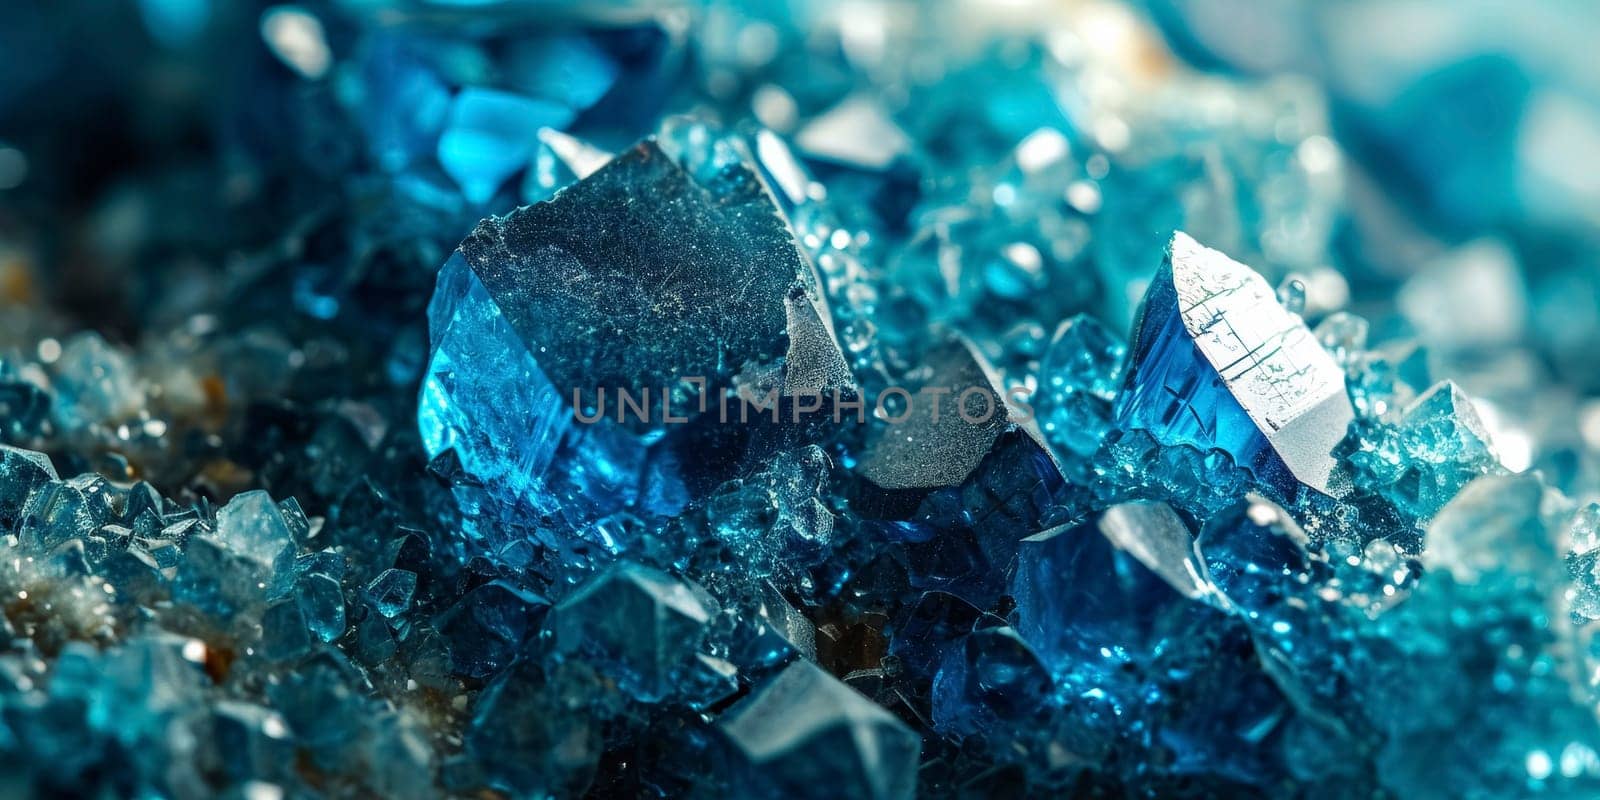 Vibrant Blue Crystals Close-up Shot by andreyz